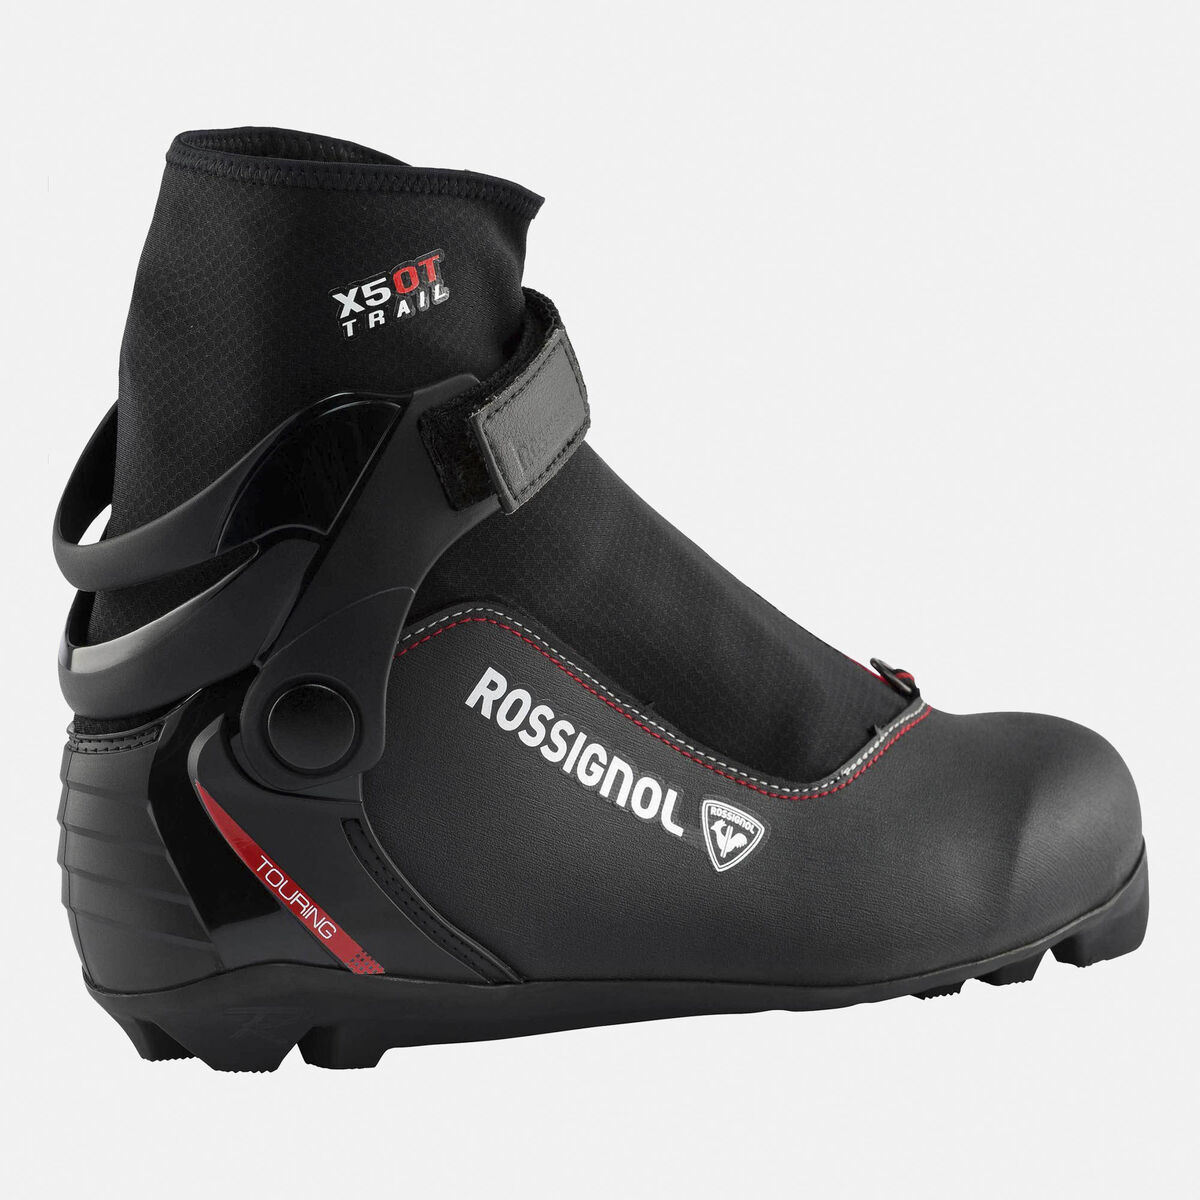 Rossignol Unisex Touring Nordic Boots X-5 Ot Multicolor